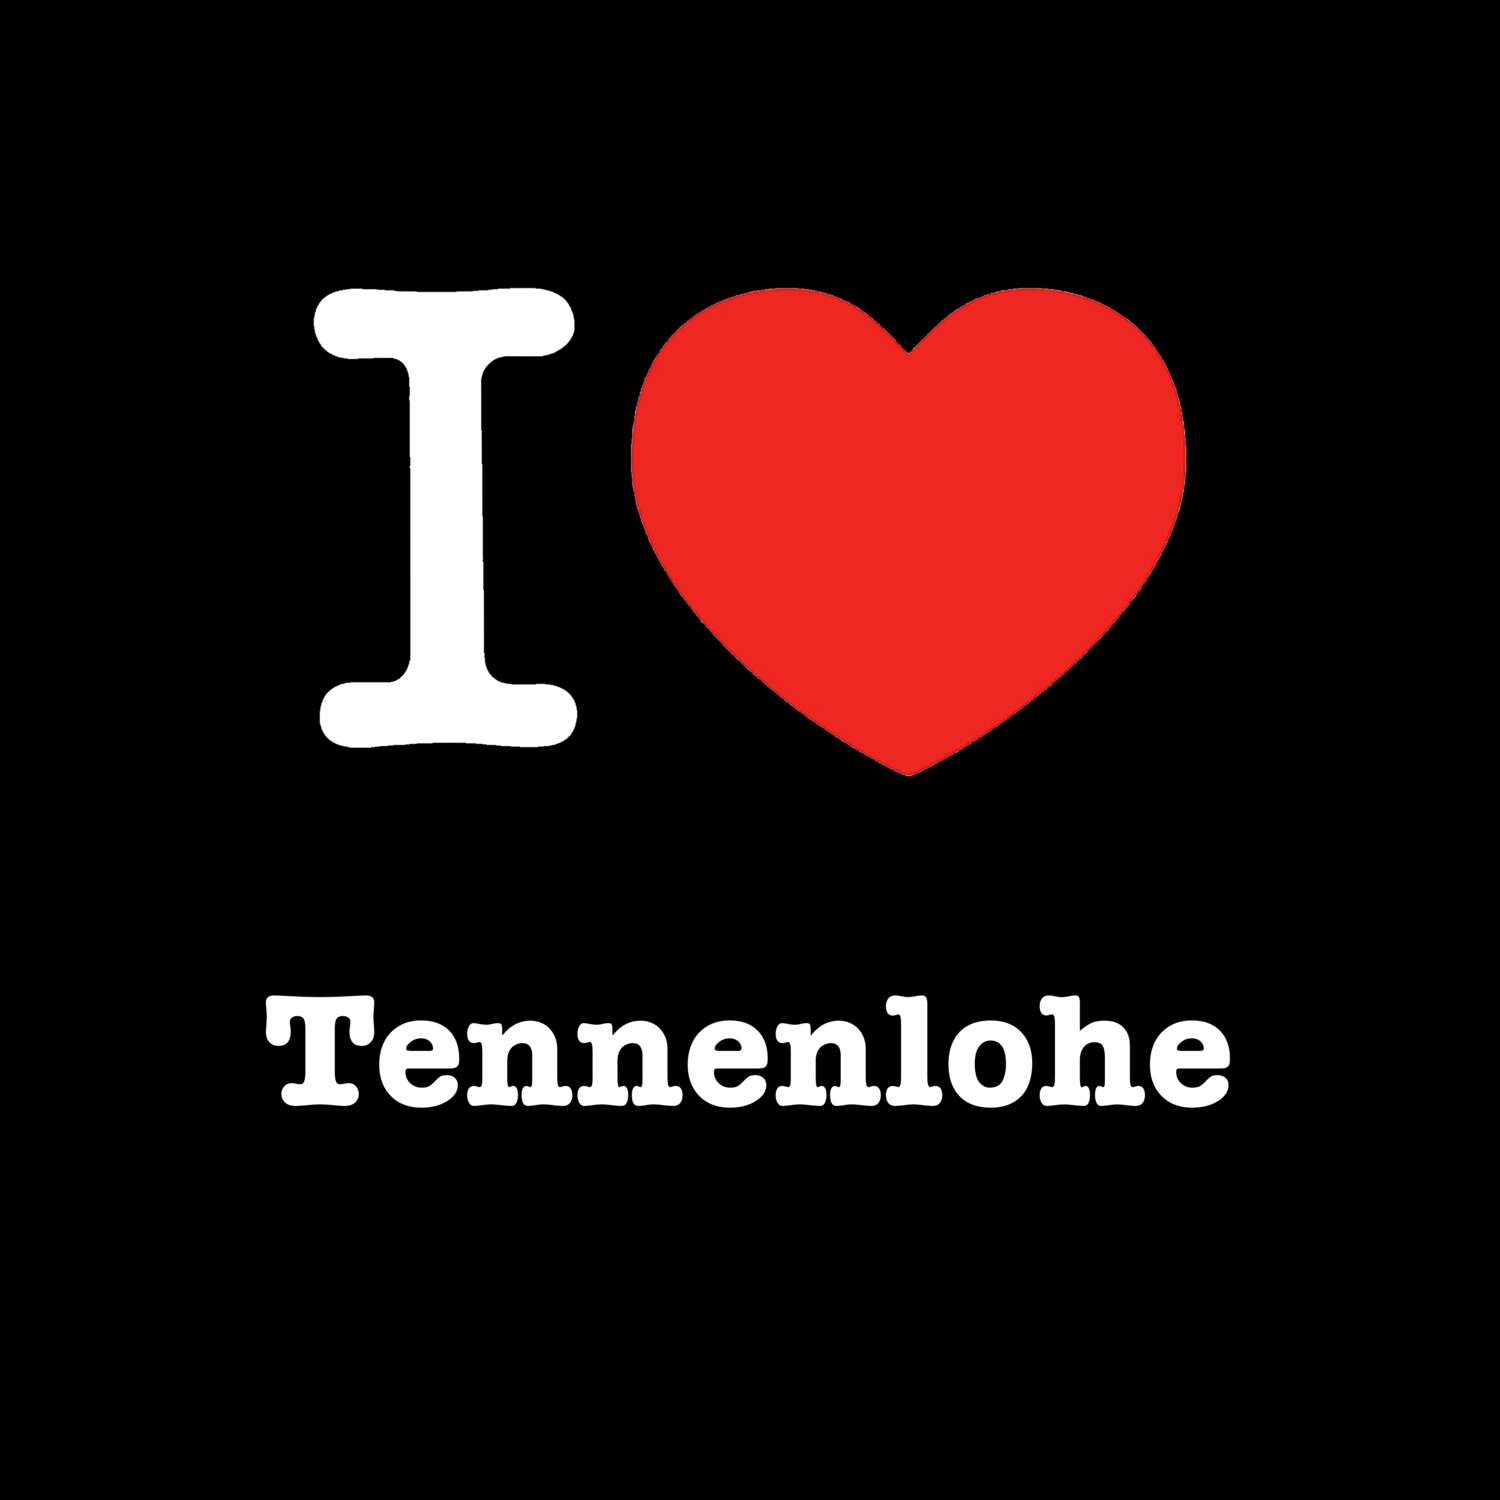 Tennenlohe T-Shirt »I love«